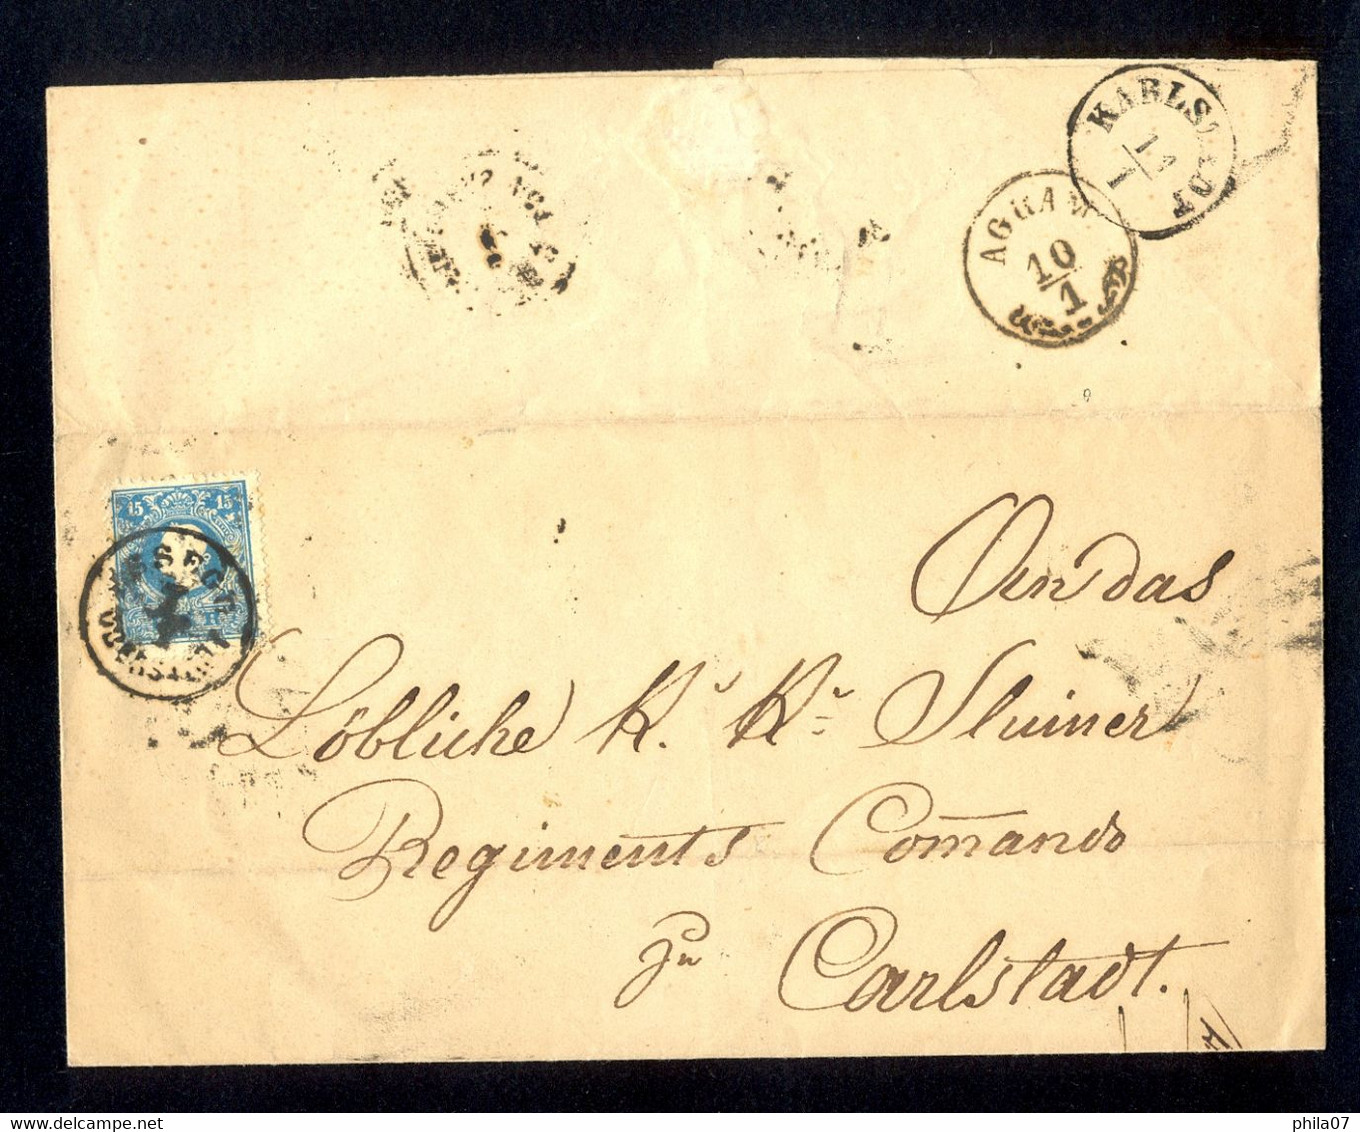 HUNGARY, CROATIA - Cover Of Letter Sent From ESSEG (Osijek) To CARLSTADT (Karlovac) Via AGRAM (Zagreb) 1862. - ...-1867 Vorphilatelie